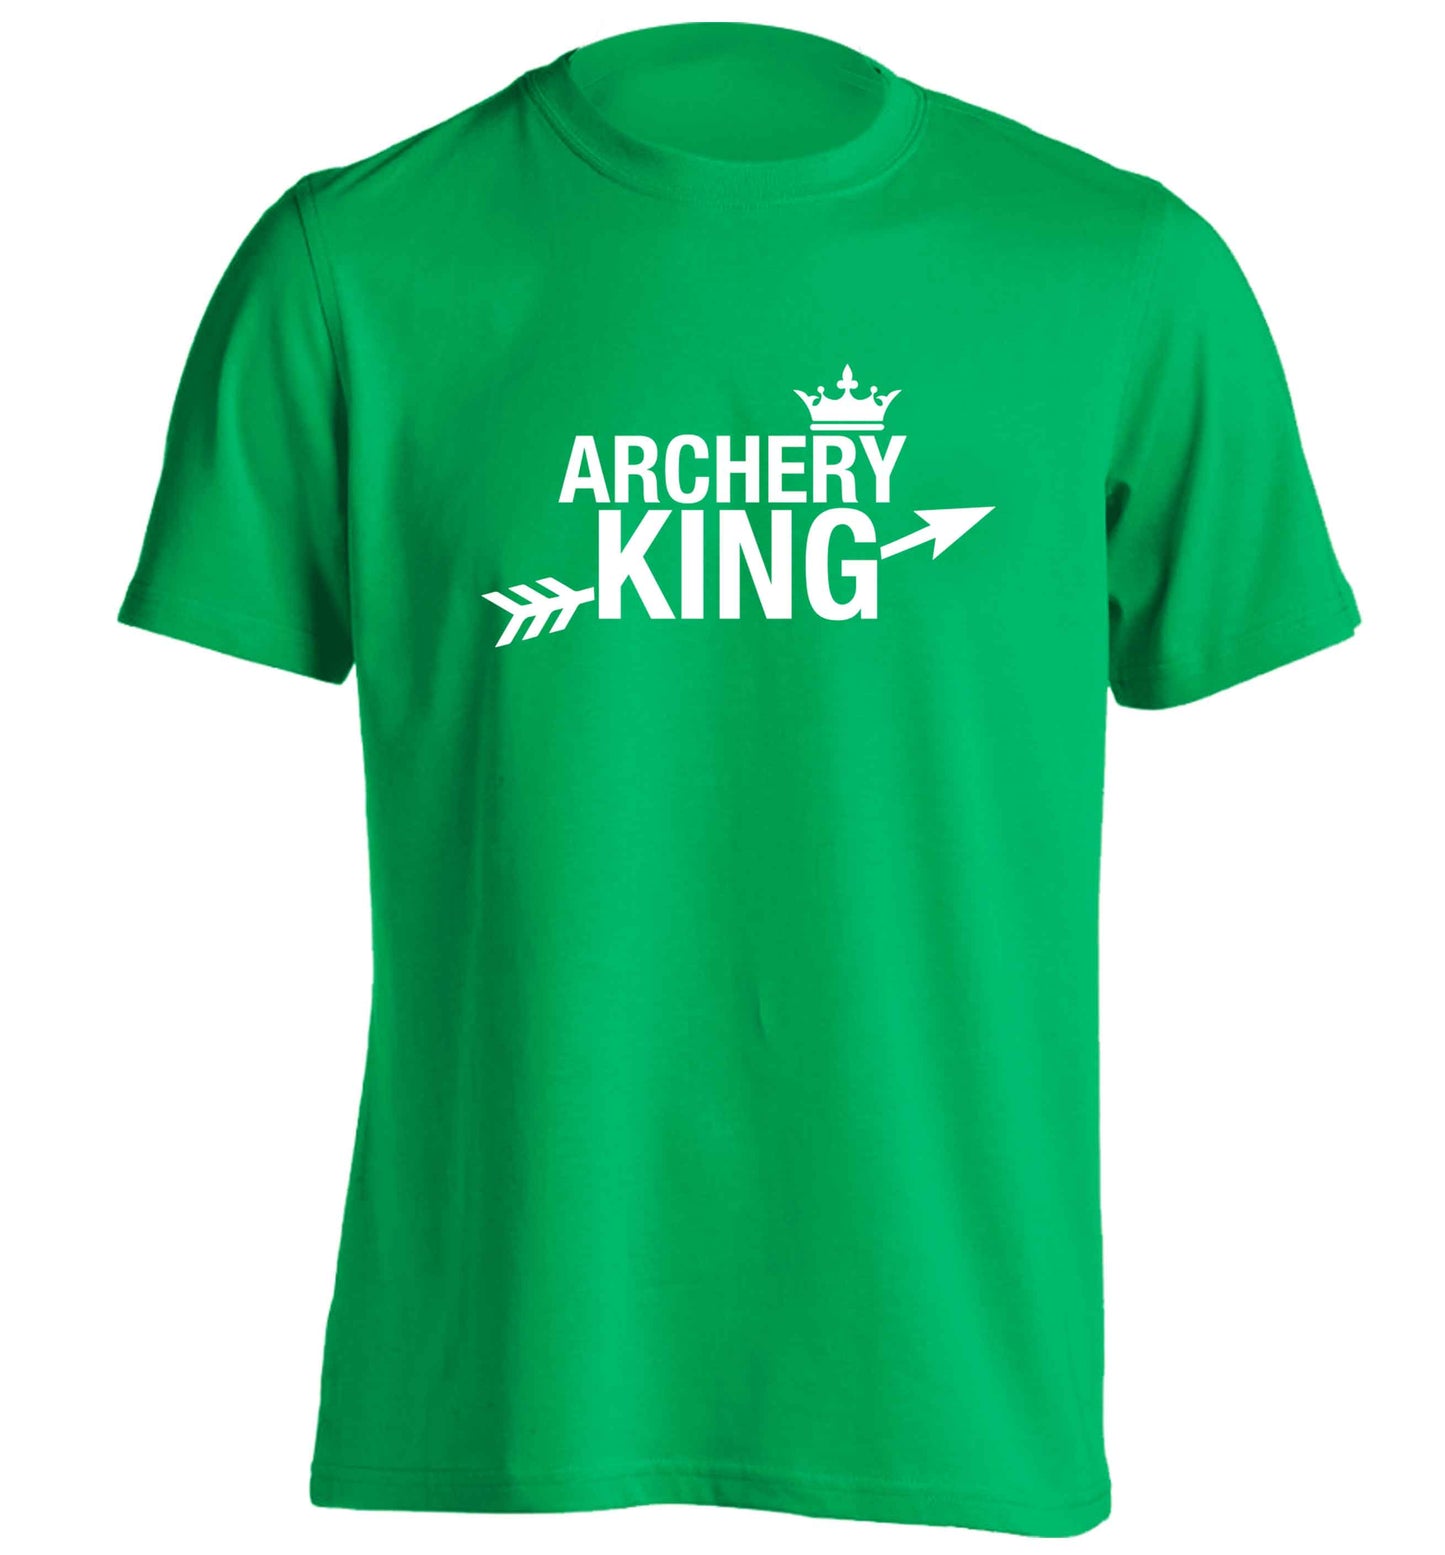 Archery king adults unisex green Tshirt 2XL